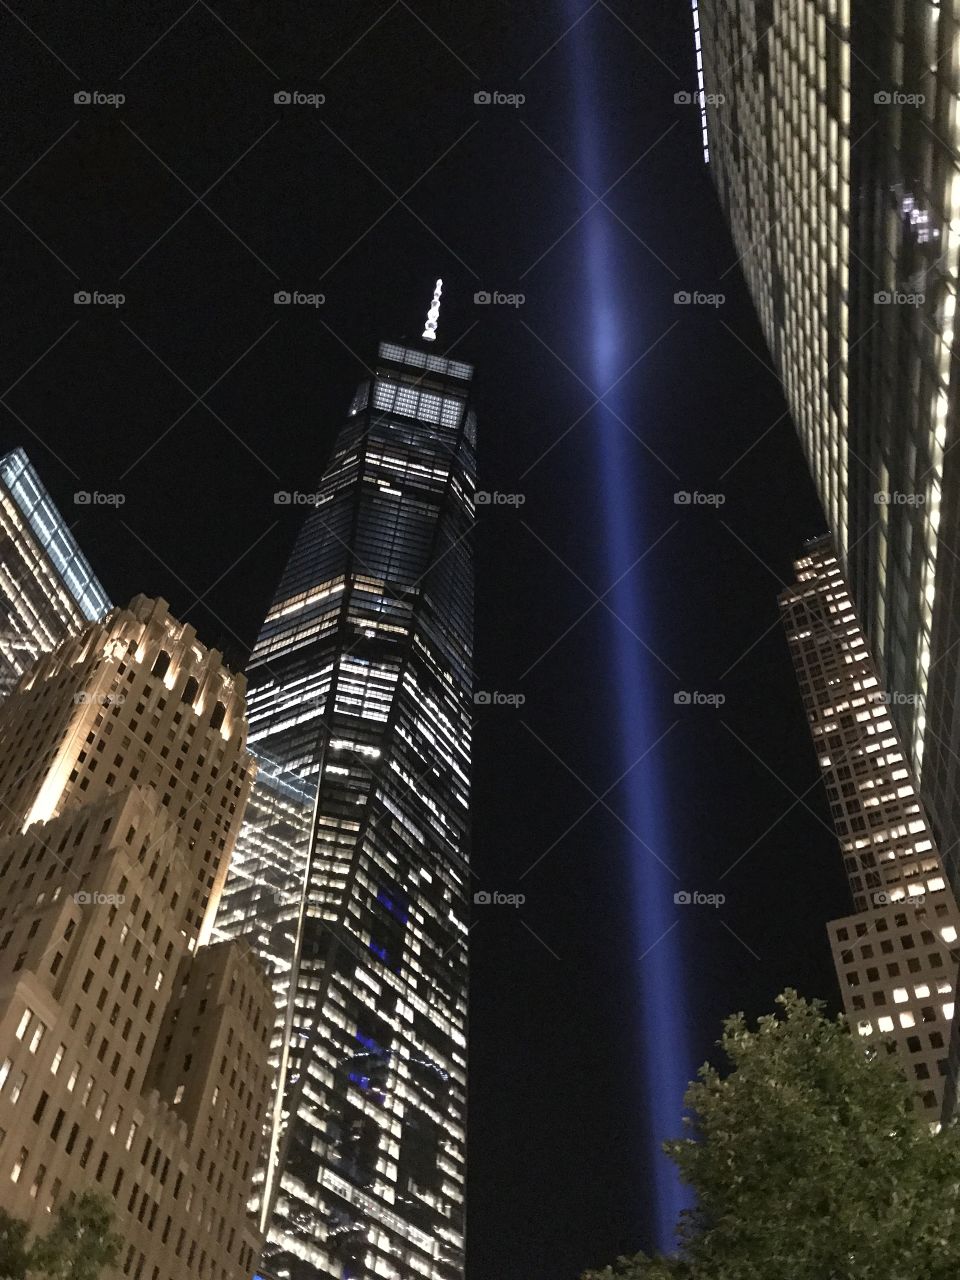 Freedom tower 9/11 New York City memorial 